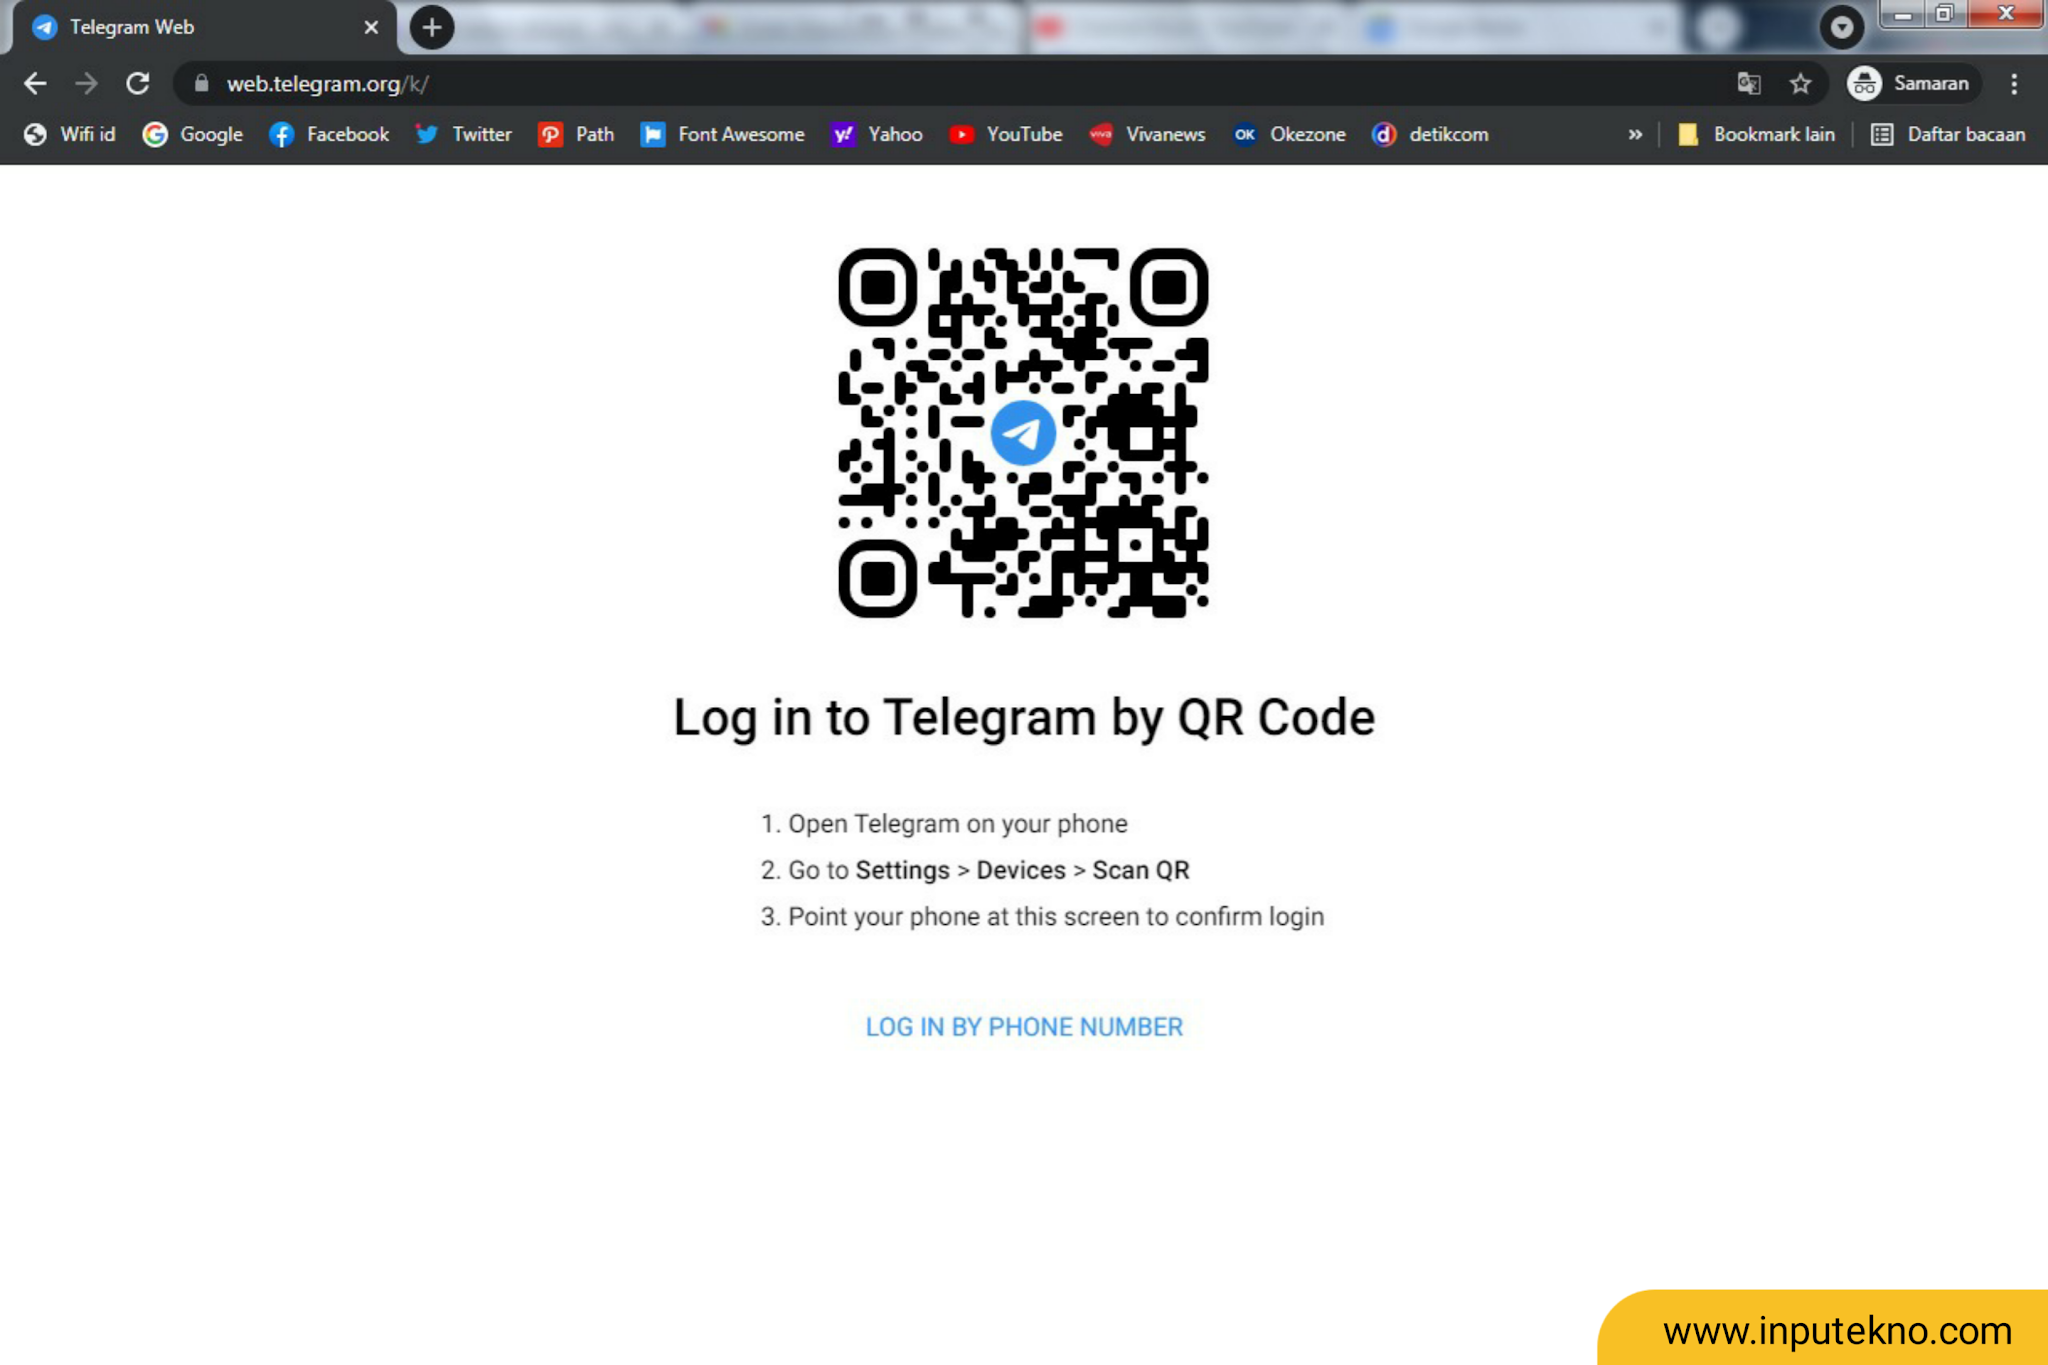 QR код телеграм. Web Telegram QR код. Как войти в телеграмм по QR коду. Вход в телеграм по QR коду на компьютере. Тг через qr код